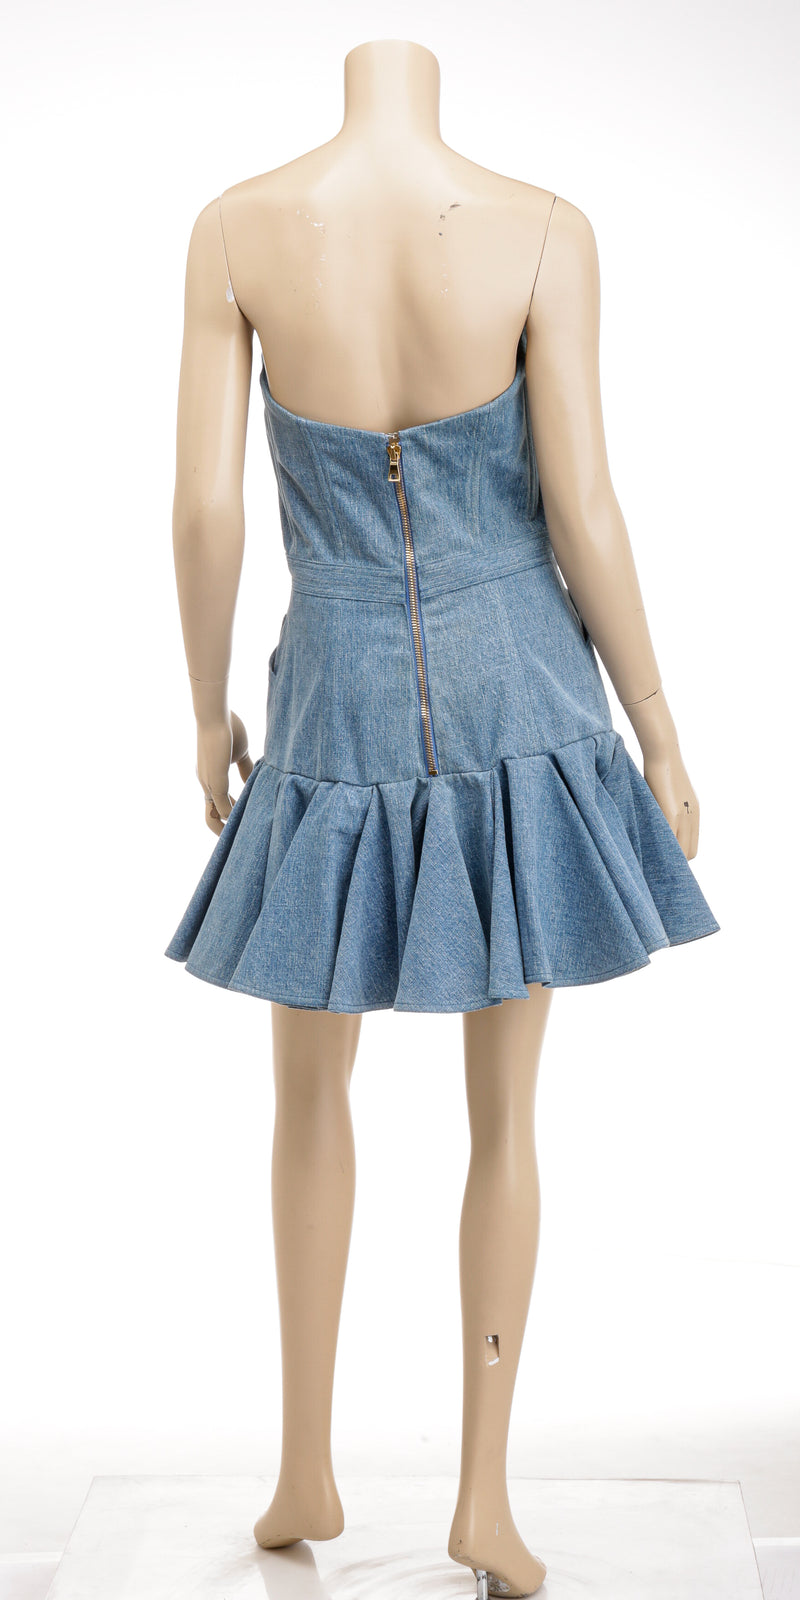 Balmain Blue Denim Strapless Mini Dress Size